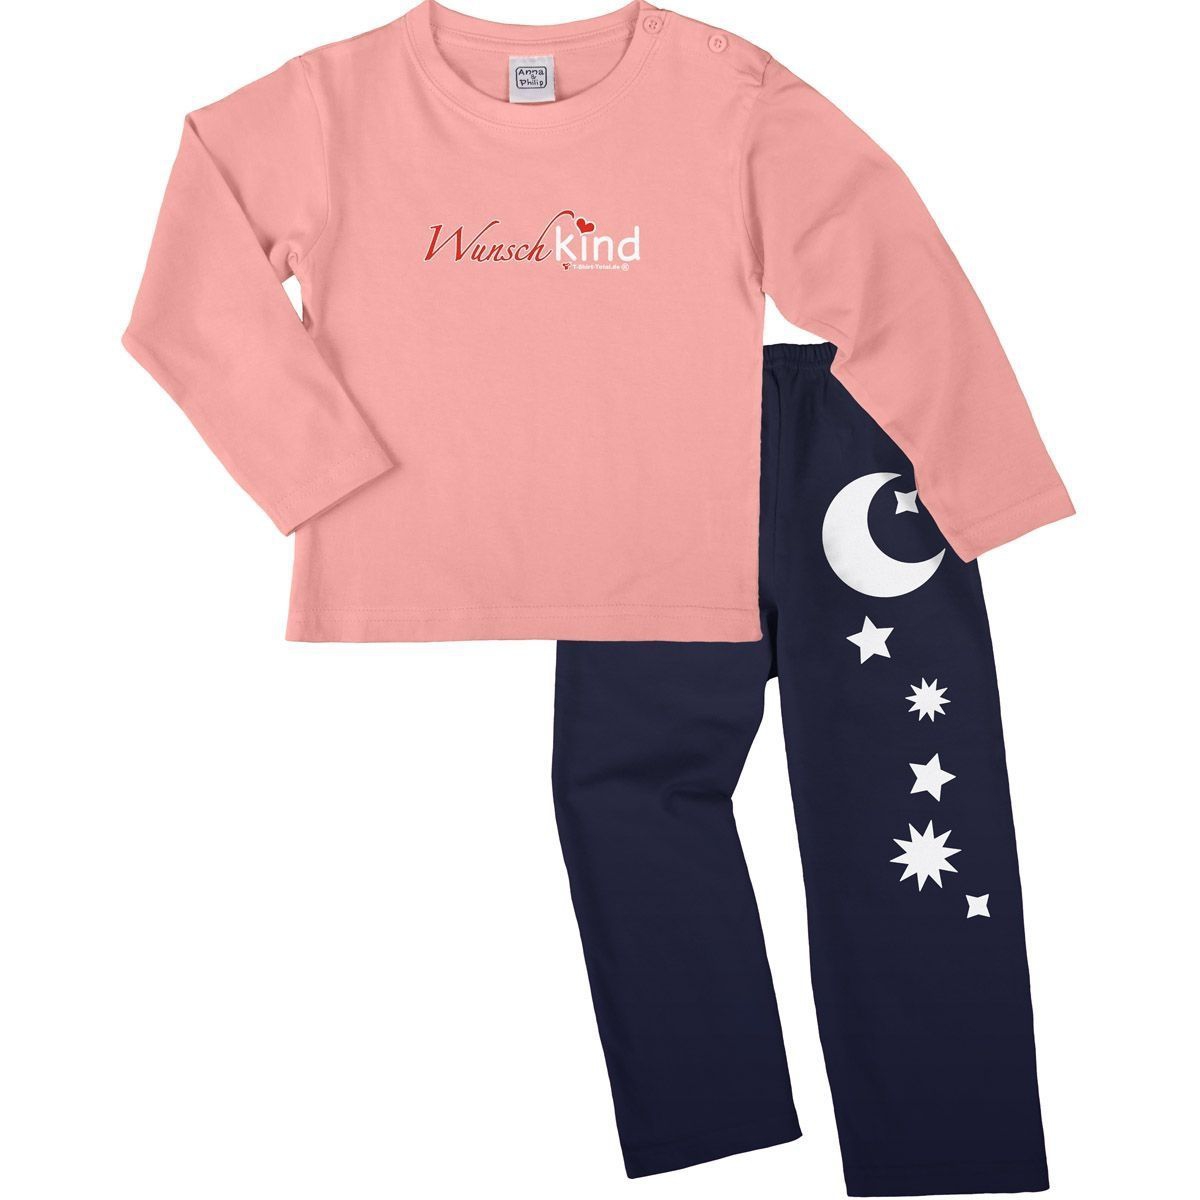 Wunschkind Pyjama Set rosa / navy 110 / 116